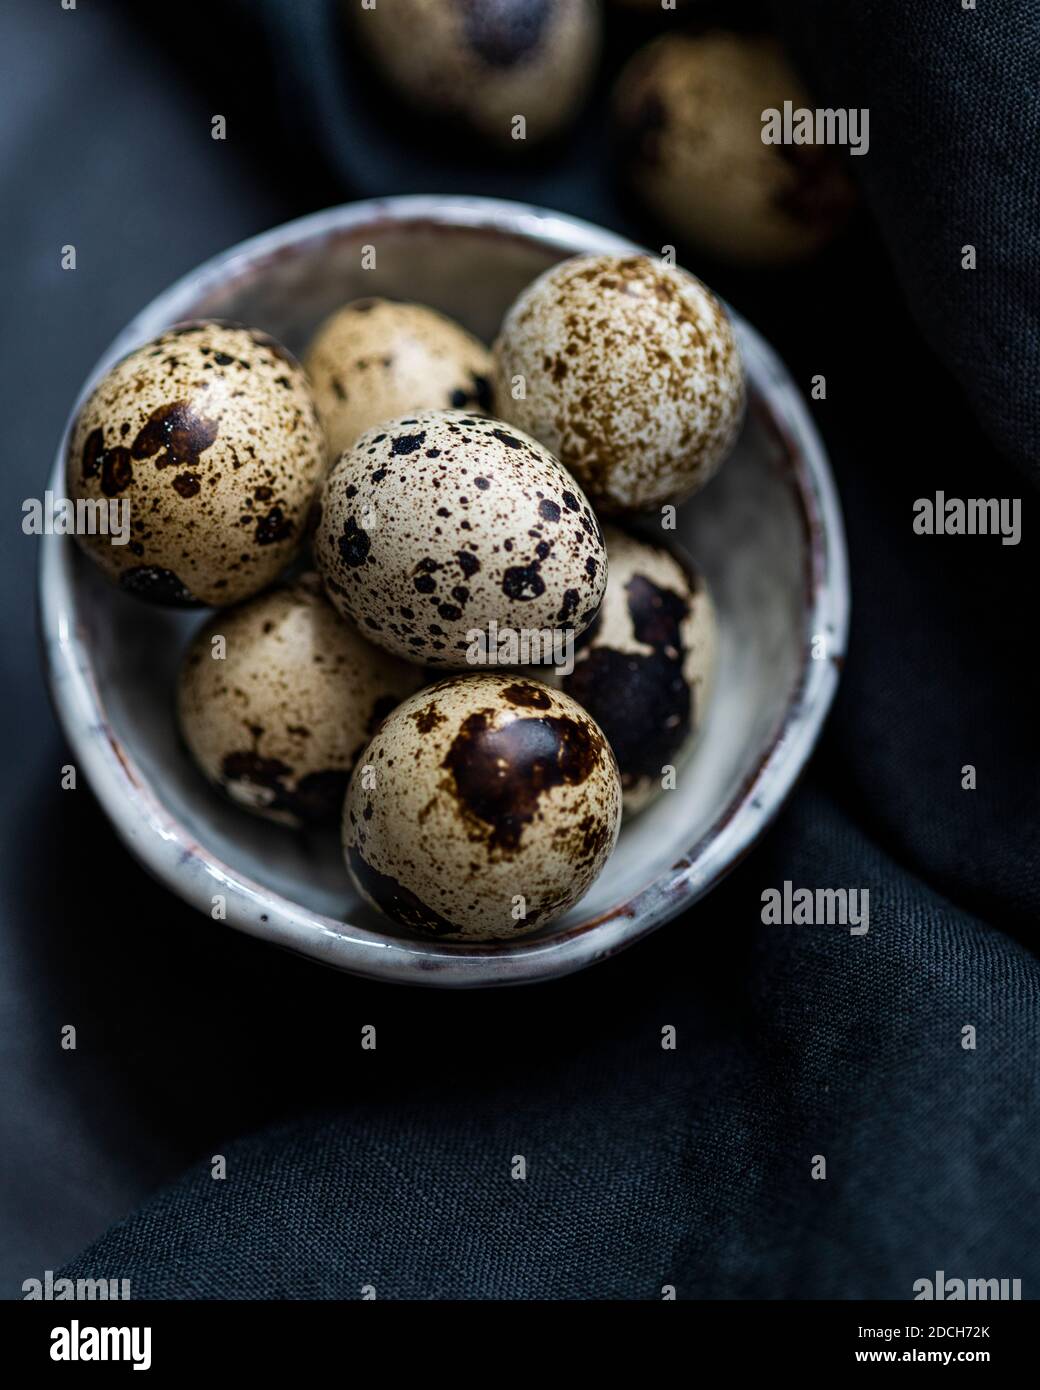 Quail eggs in white bowl on black backdrop, quail eggs, pile of quails eggs in bowl, speckled eggs, speckled eggs in bowl, quail eggs dark background Stock Photo